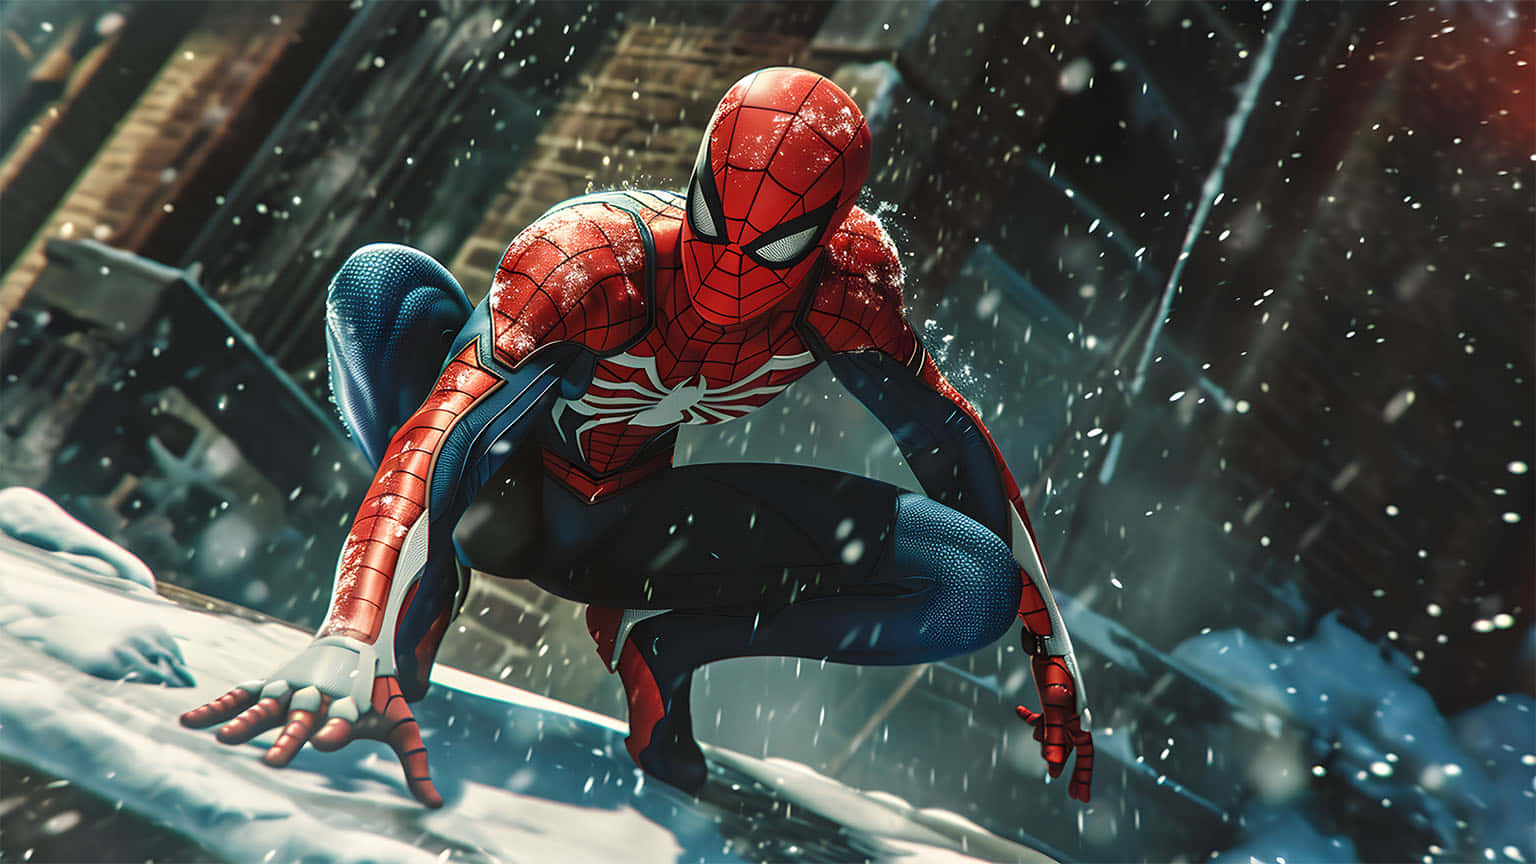 Spidermanin Action Snowy Cityscape.jpg Wallpaper